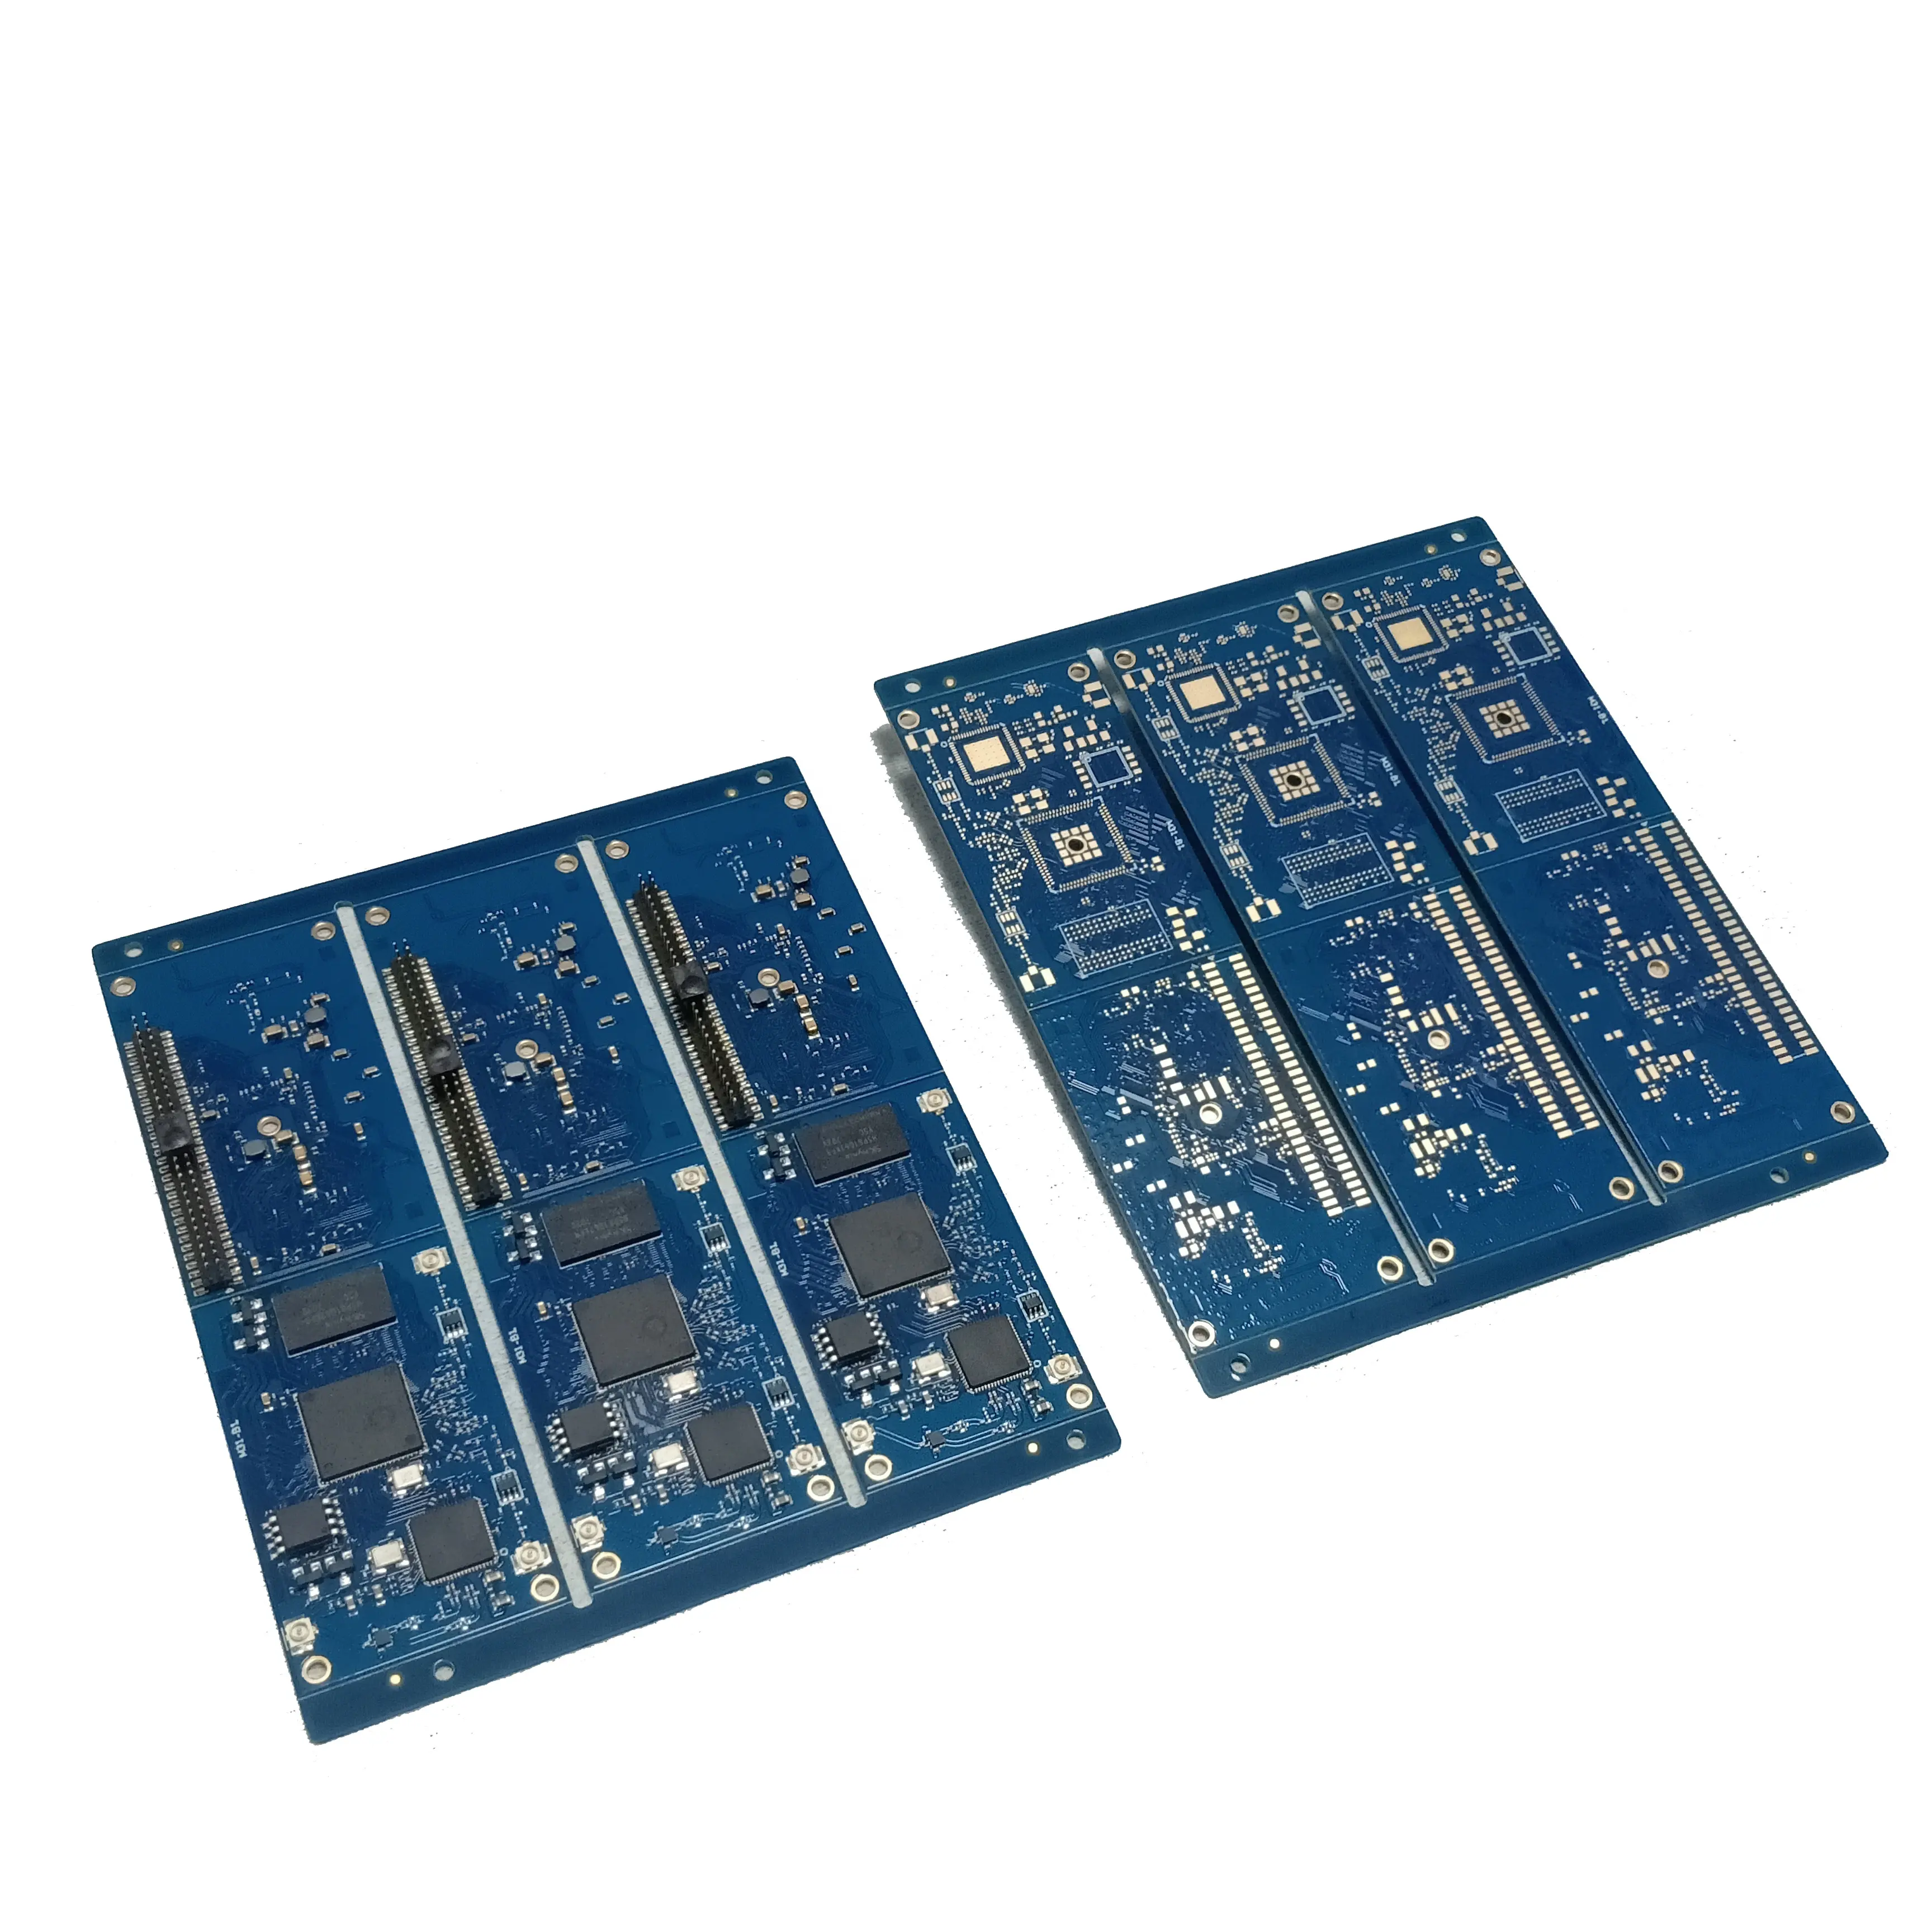 94v0 circuit board customized e207844 smt 5 94v 0 pcb and sd card mini dvr pcb board acdc led bulb driver pcb assembly service